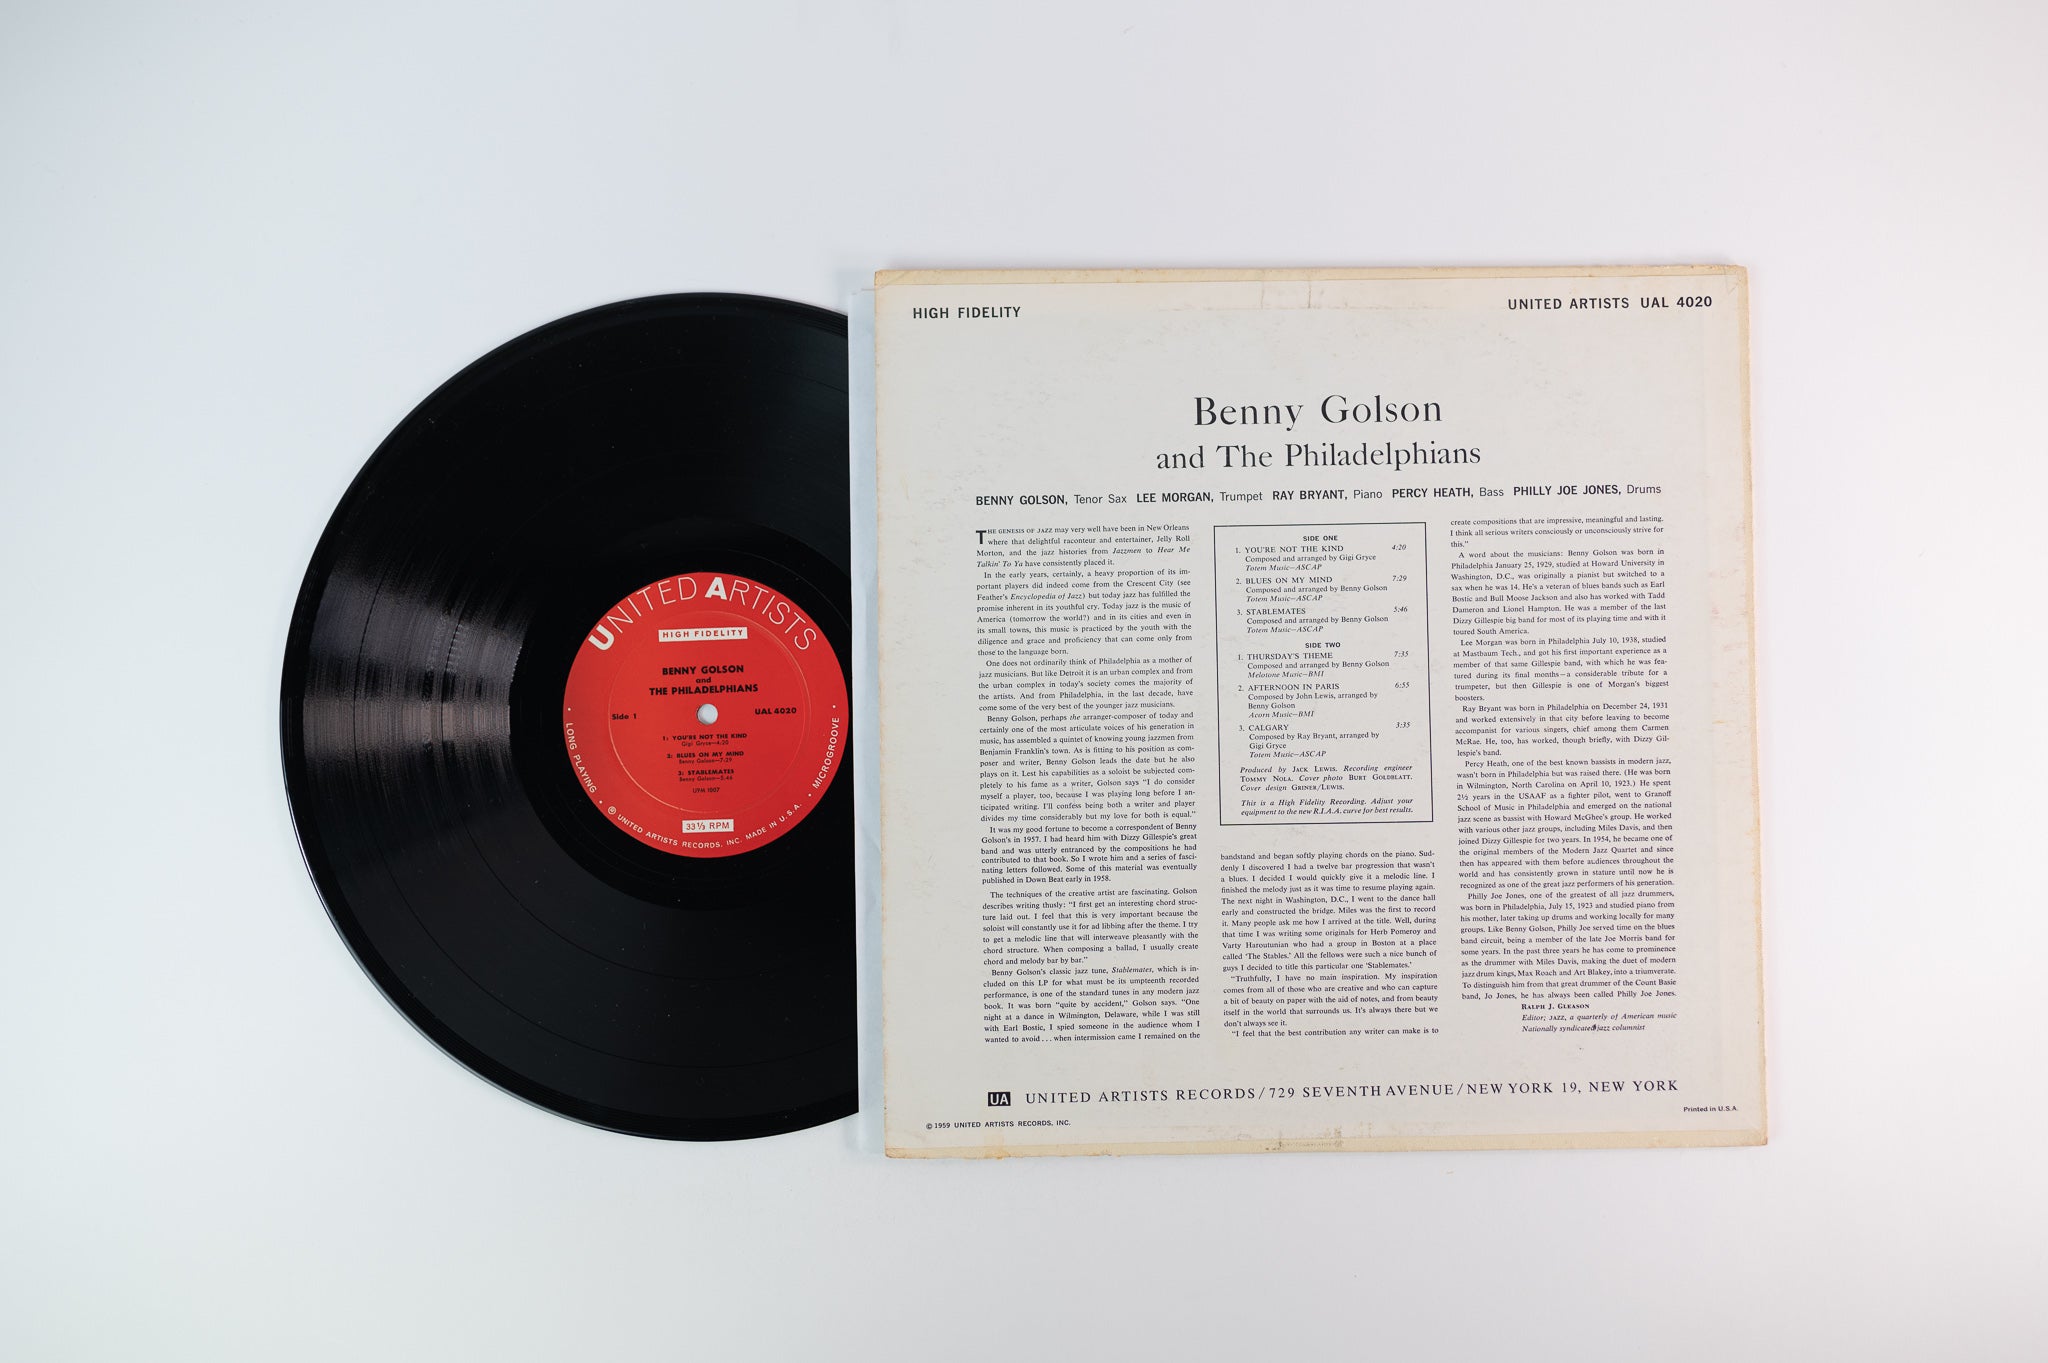 Benny Golson And The Philadelphians - Benny Golson & The Philadelphians on United Artists Records Mono